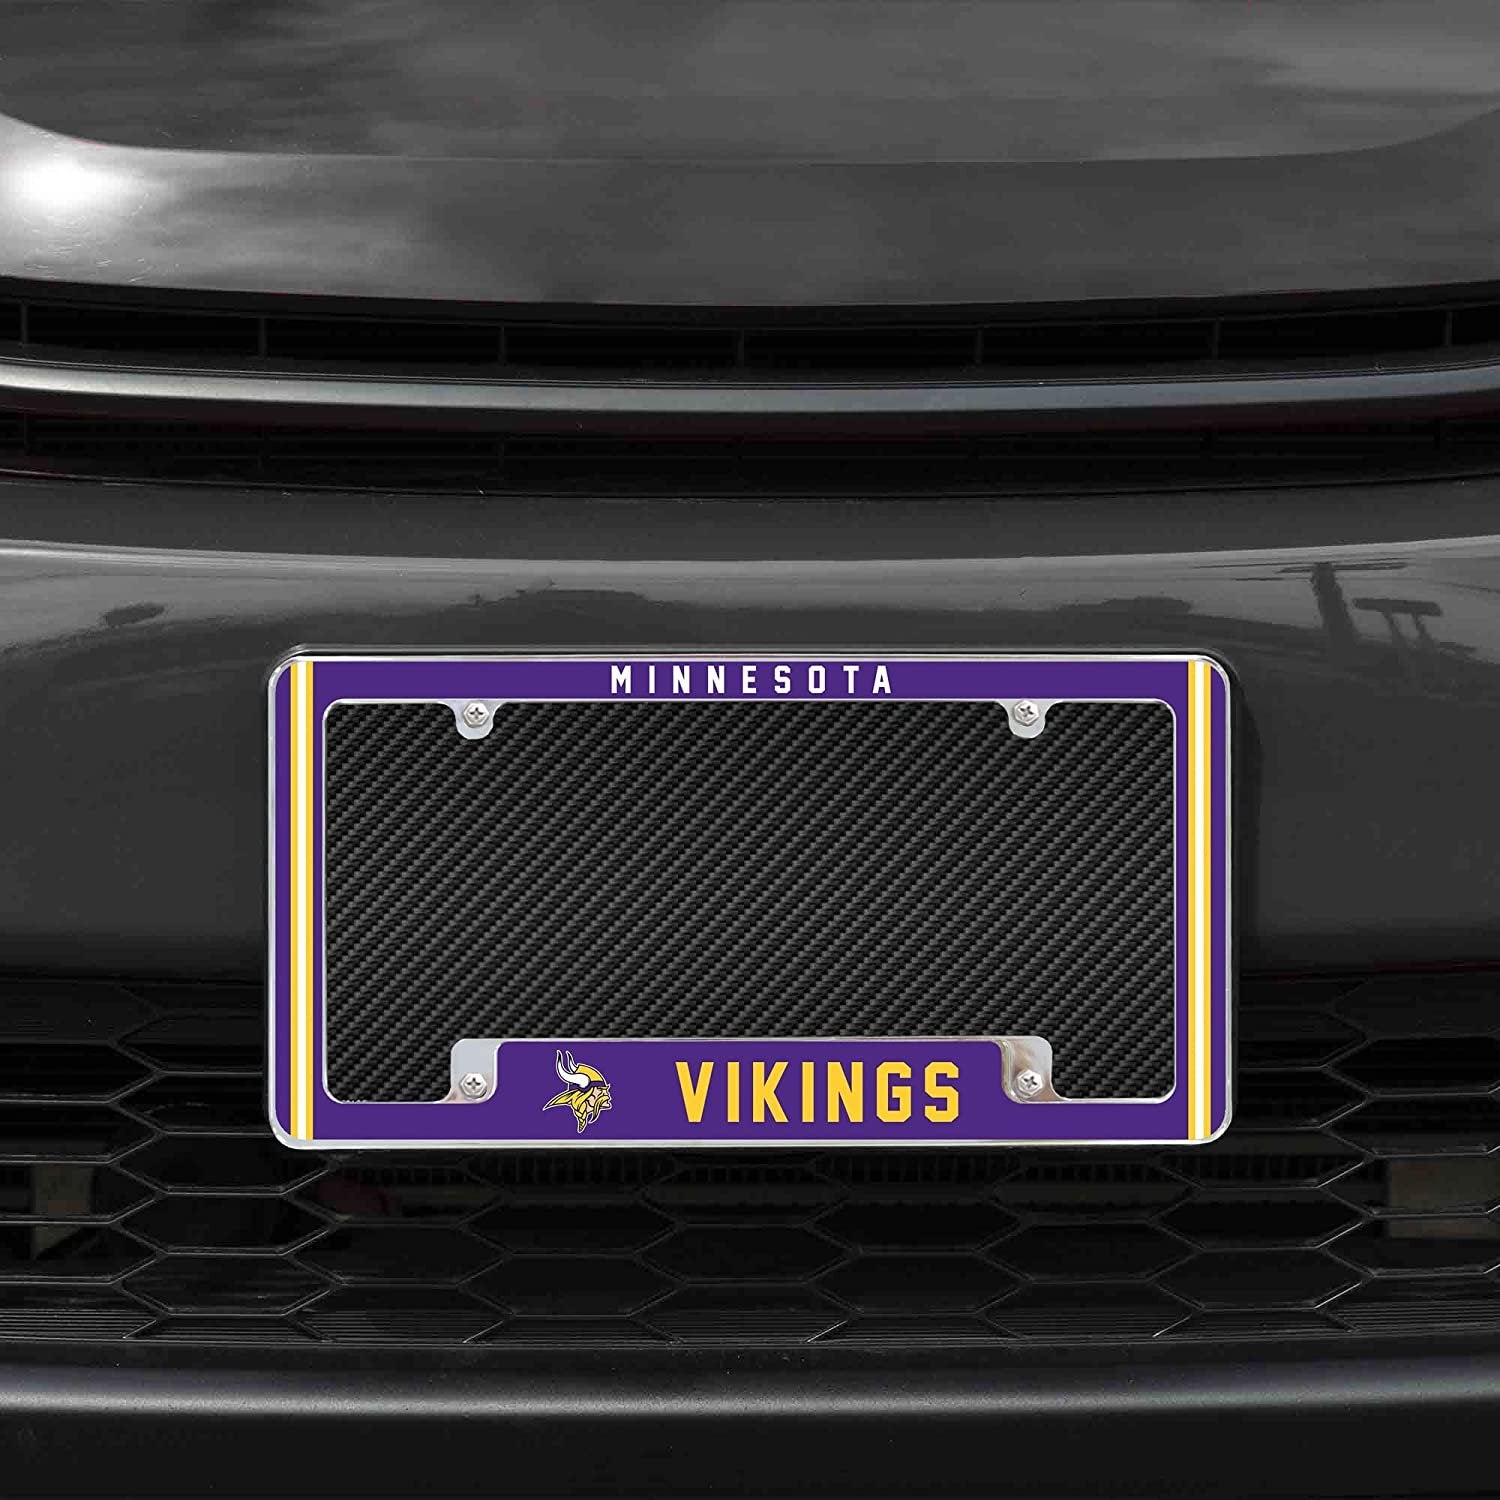 Minnesota Vikings Metal License Plate Frame Chrome Tag Cover Alternate Design 6x12 Inch